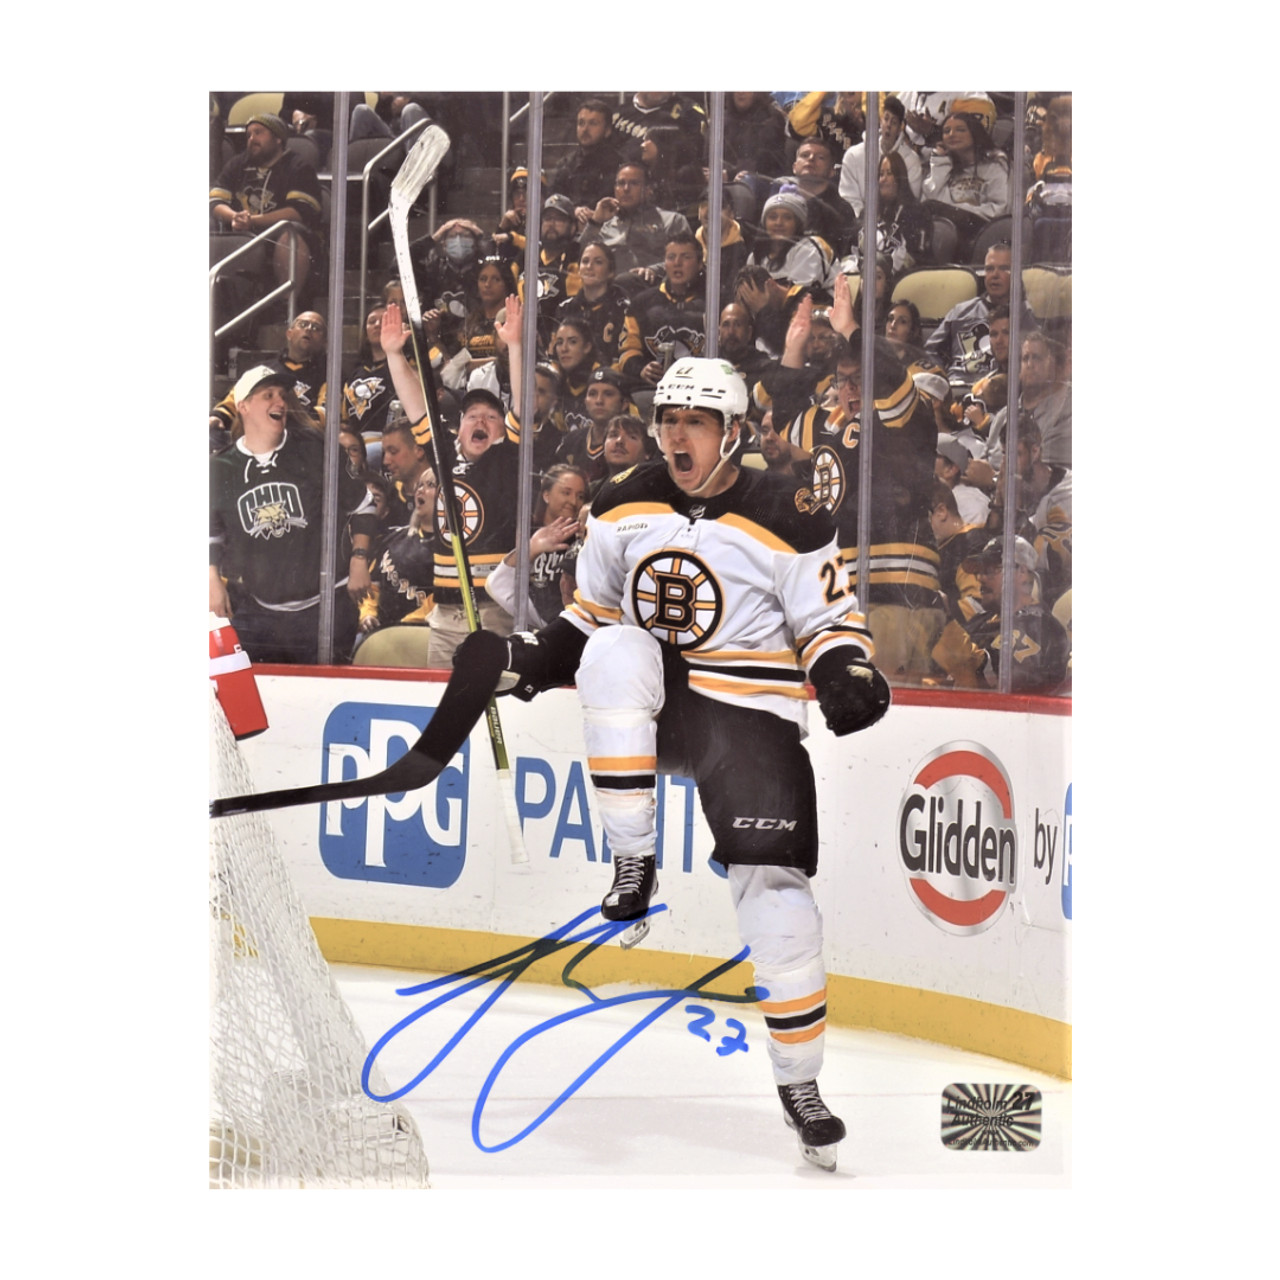 Jake DeBrusk Boston Bruins Autographed & Inscribed 16 x 20